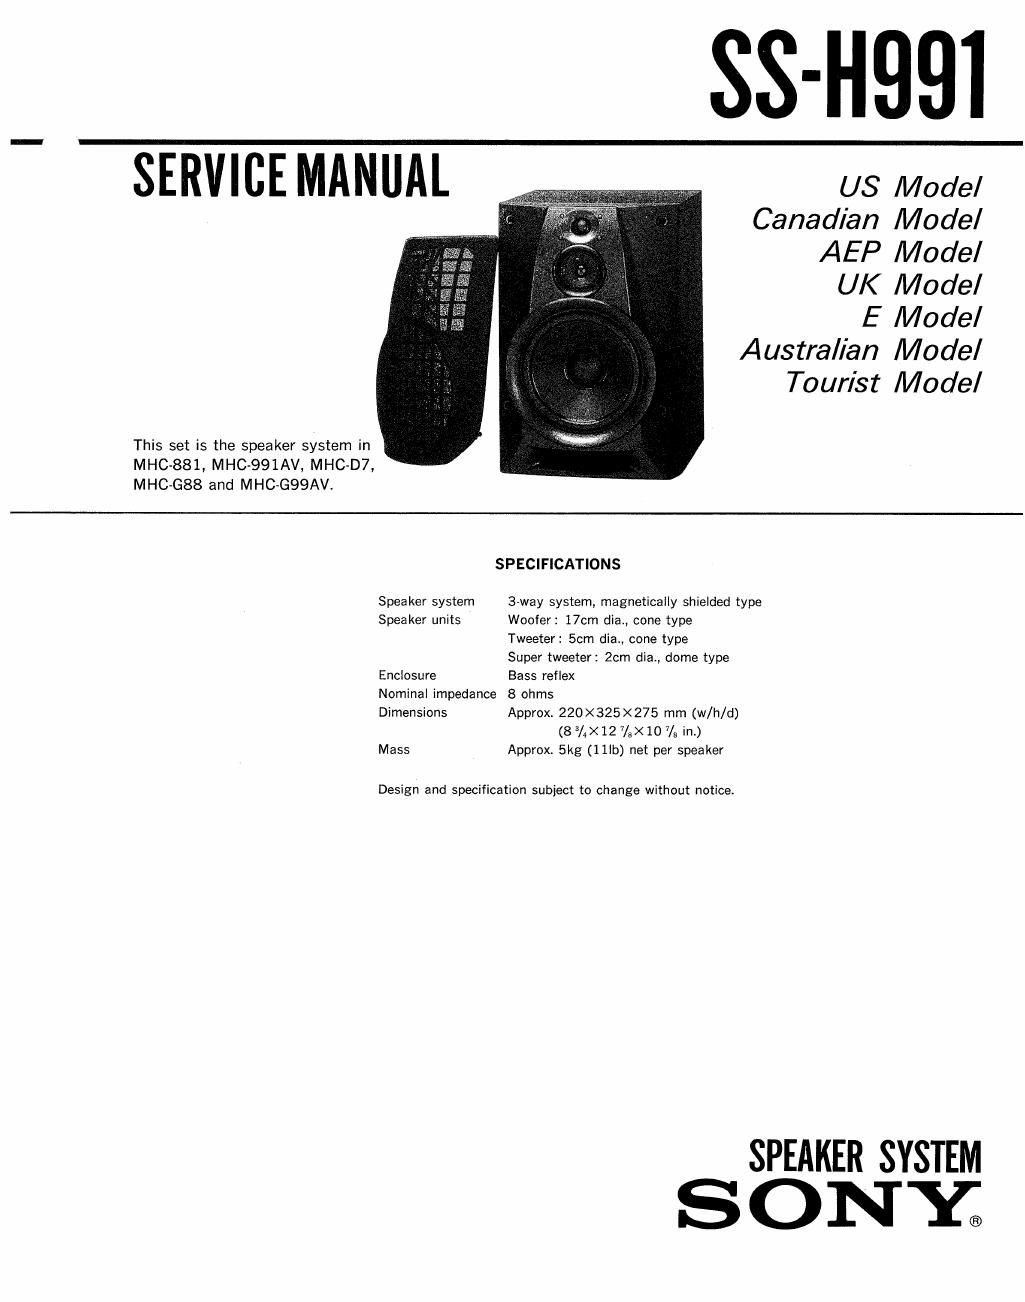 sony ss h 991 service manual